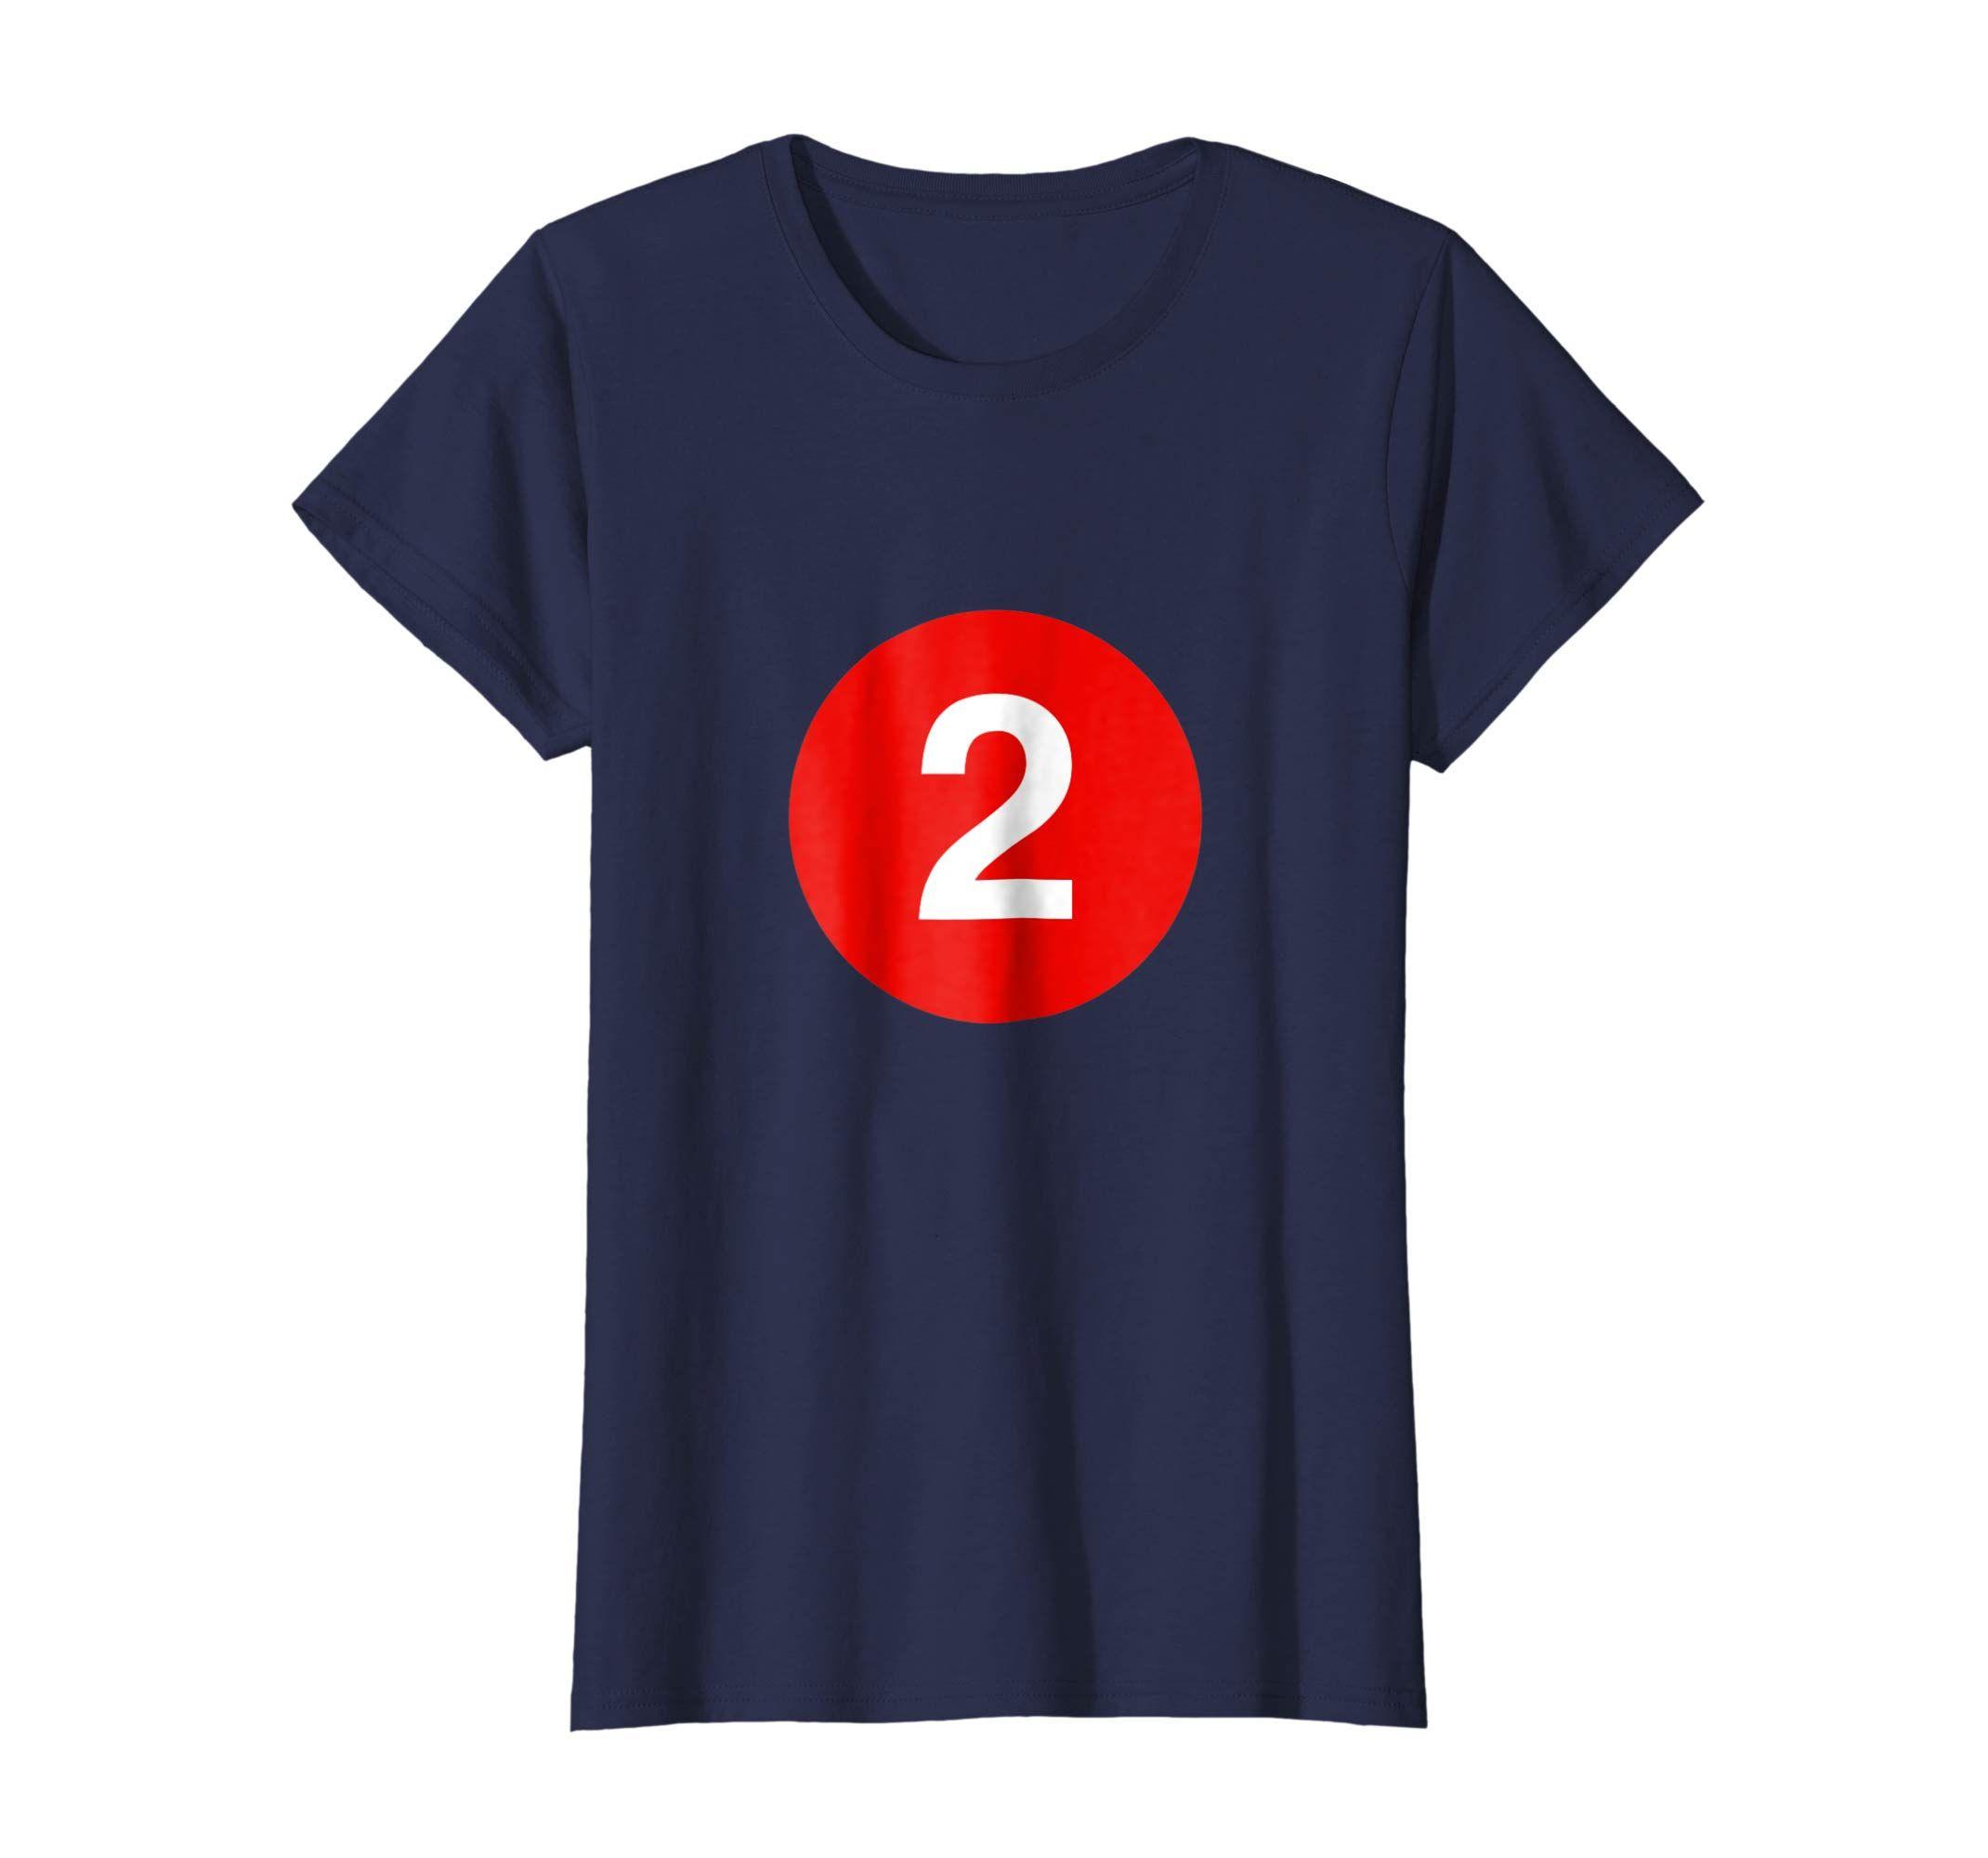 NYC Red Line Logo - Amazon.com: 2 Line - NYC Subway Train Shirt: Clothing